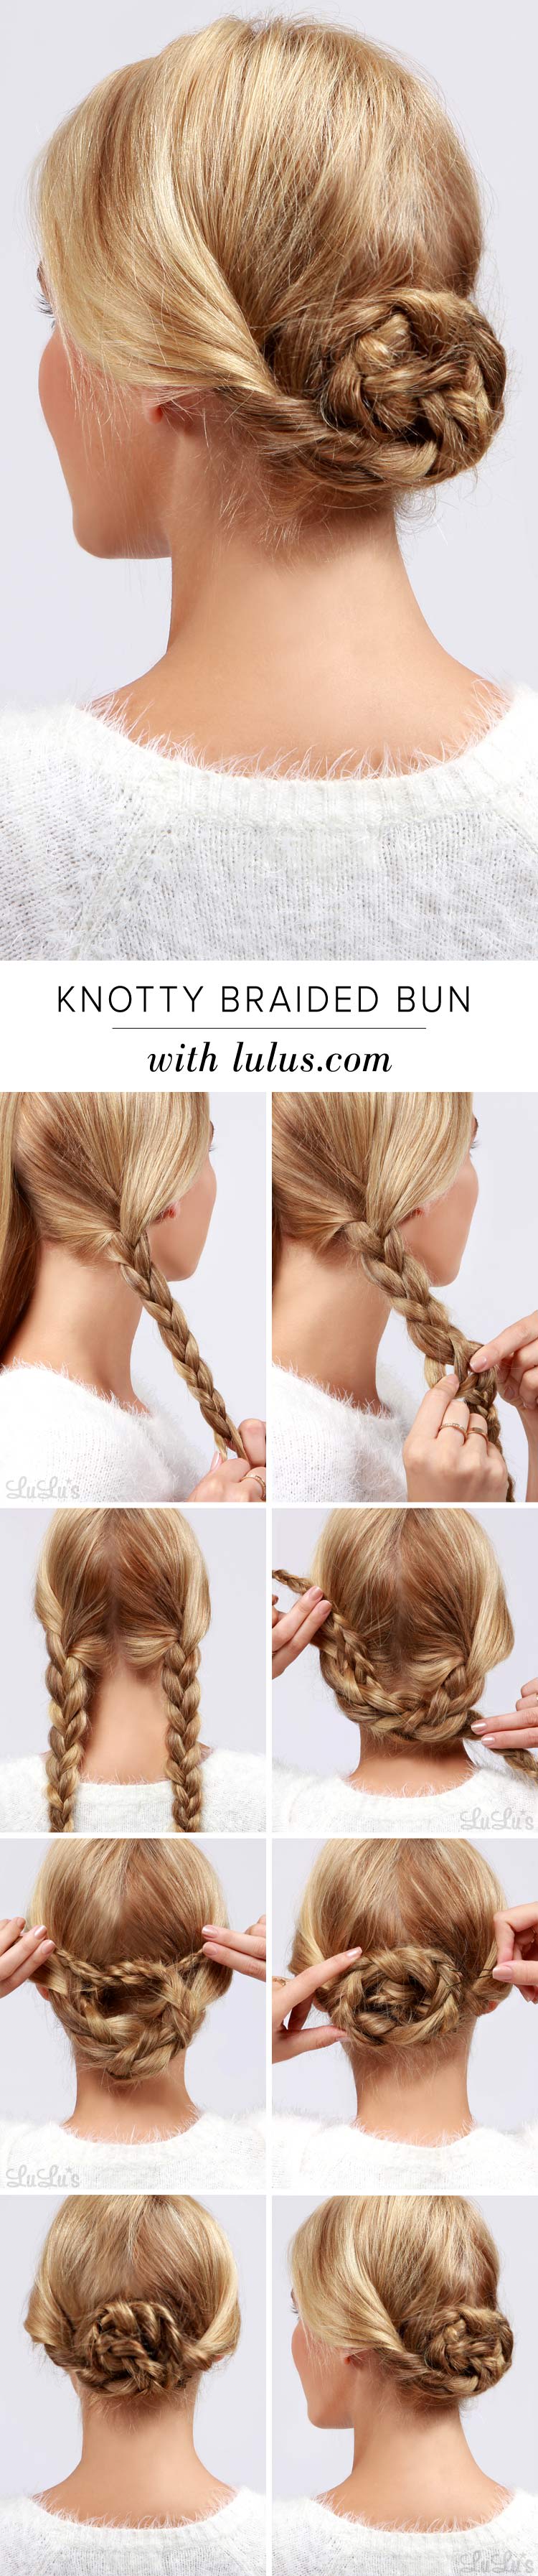 Lulus How-To: Knotty Braided Bun Hair Tutorial  Fashion Blog